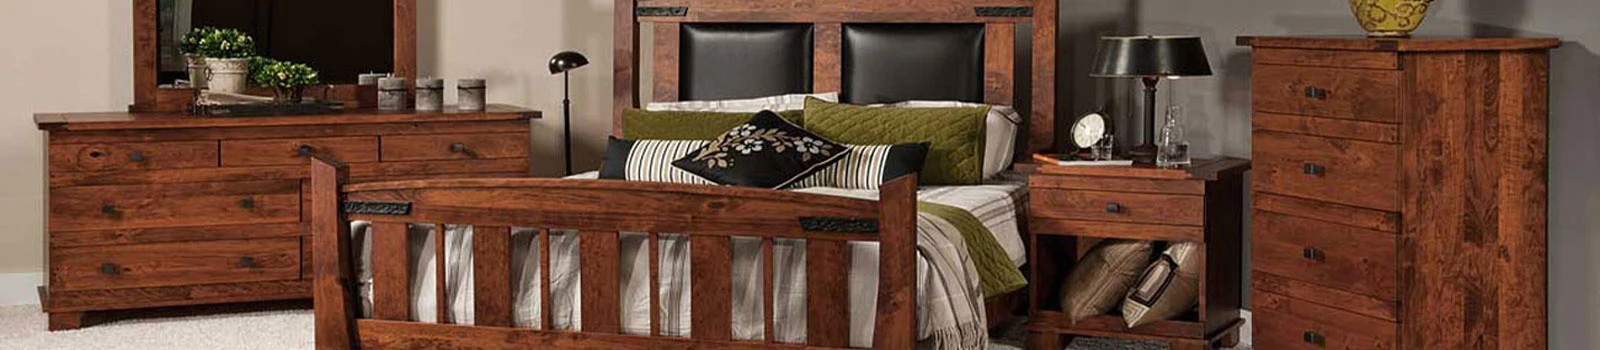 Promo Price amish bedroom furniture